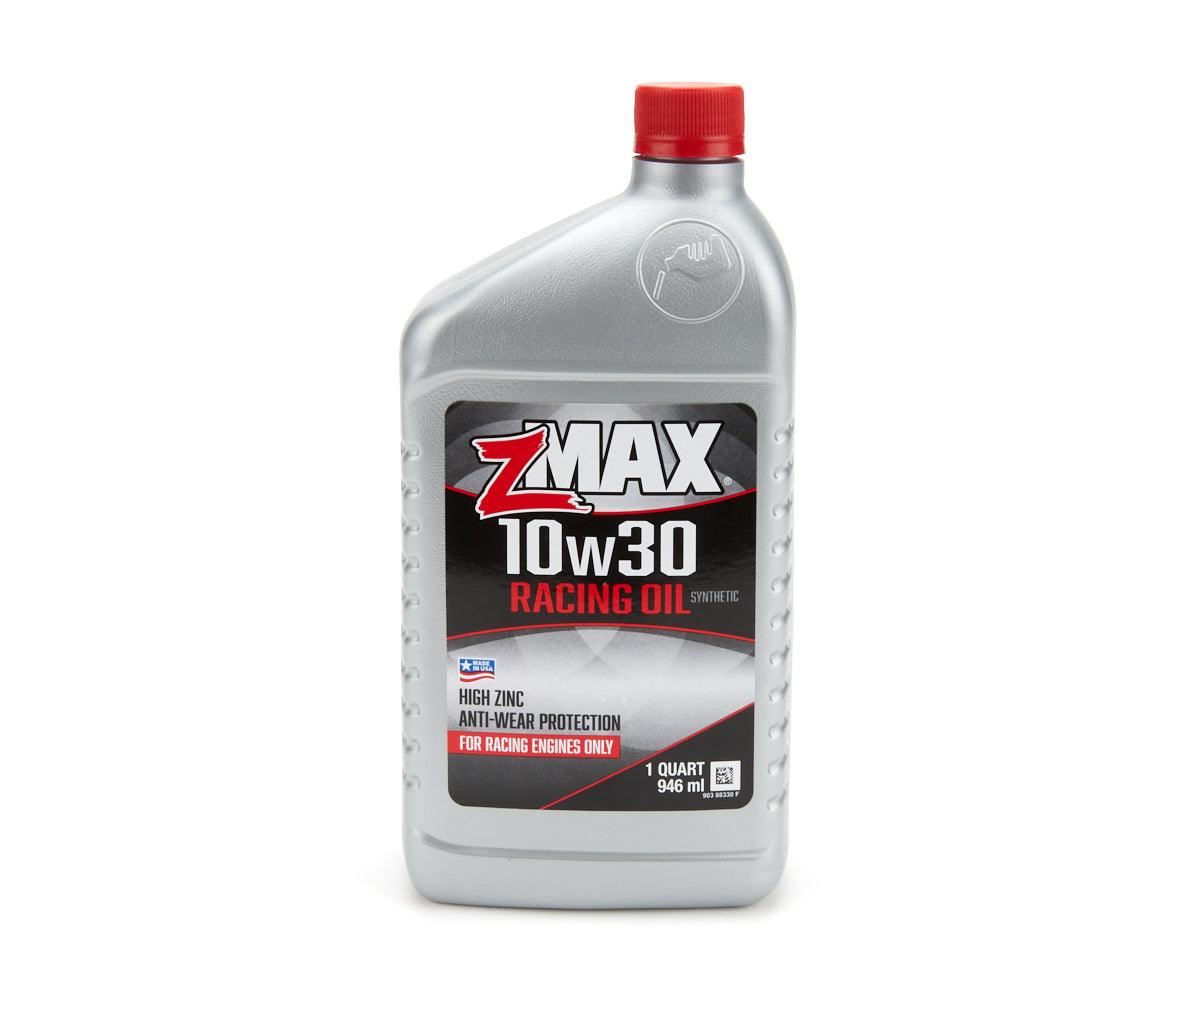 Racing Oil 10w30 32oz. Bottle - Burlile Performance Products